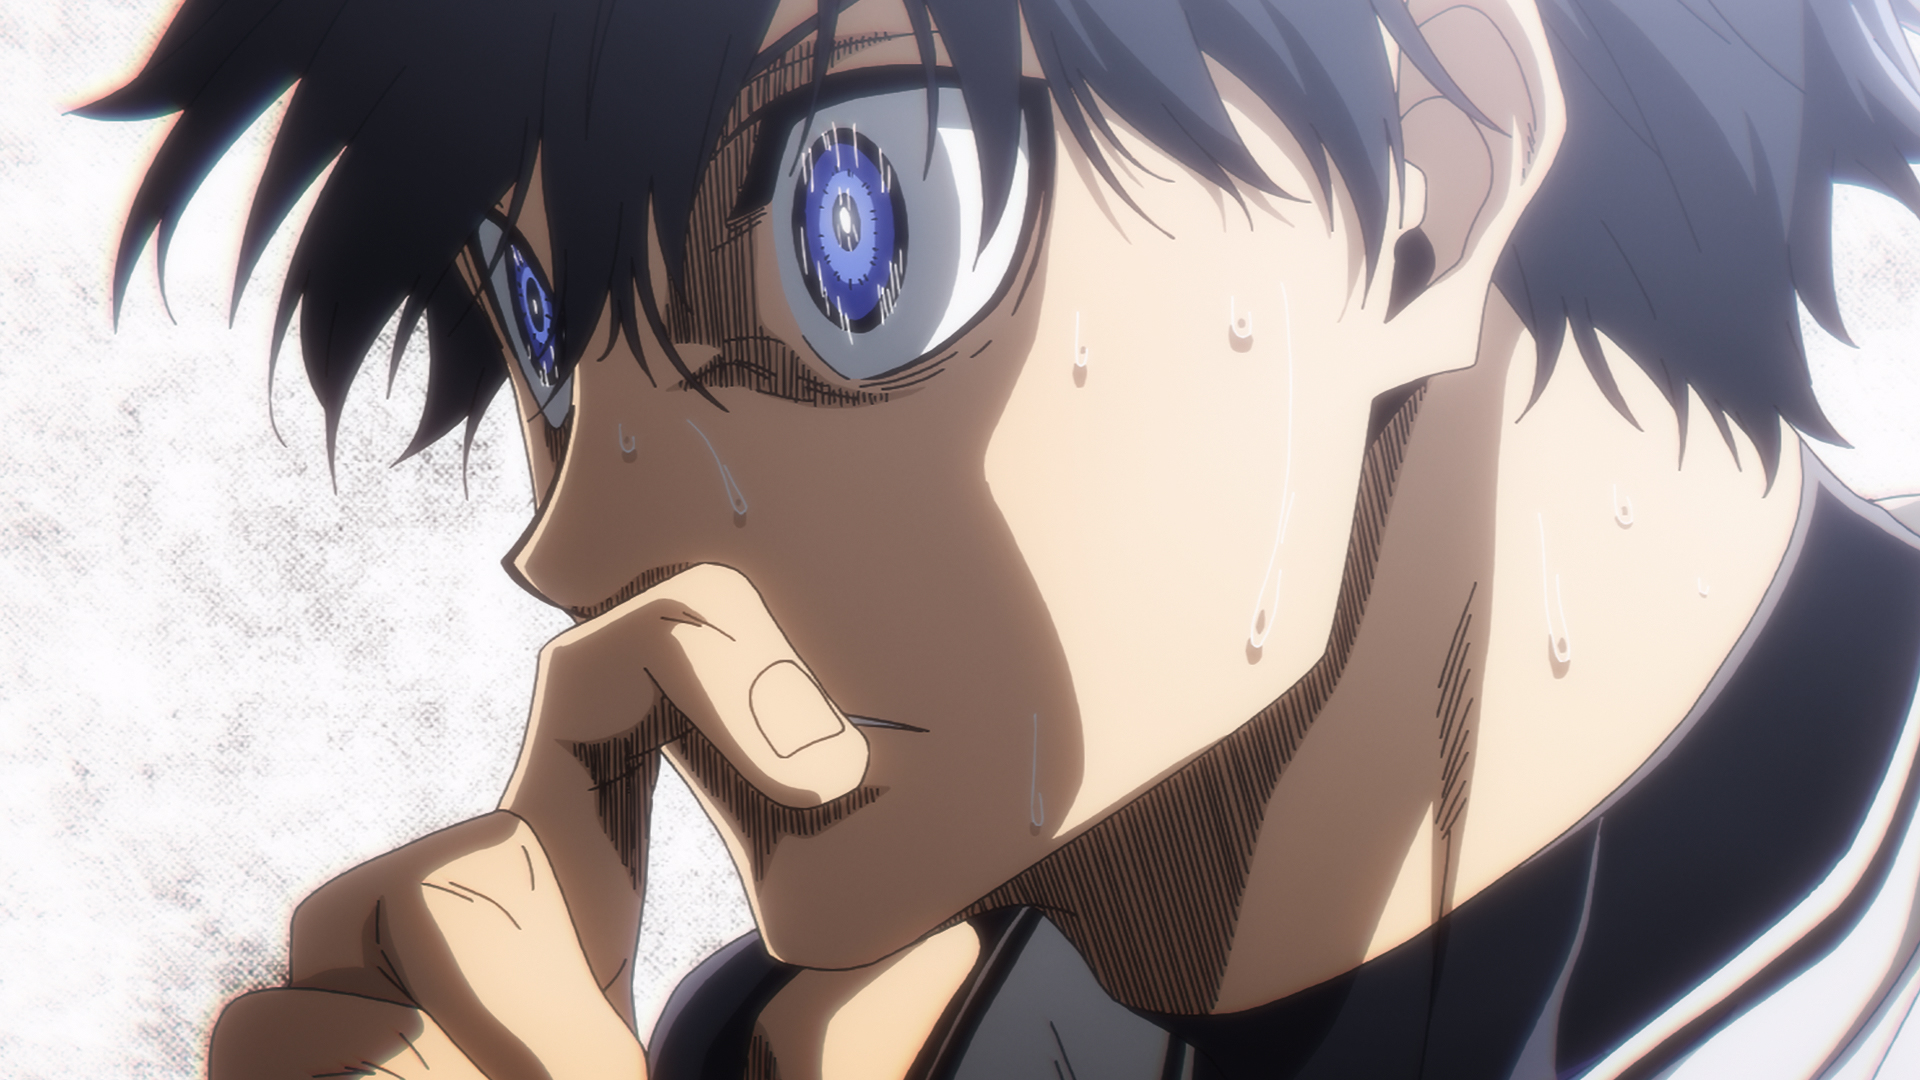 BLUELOCK: Episode Nagi Anime Film Reveals Teaser Visual, New